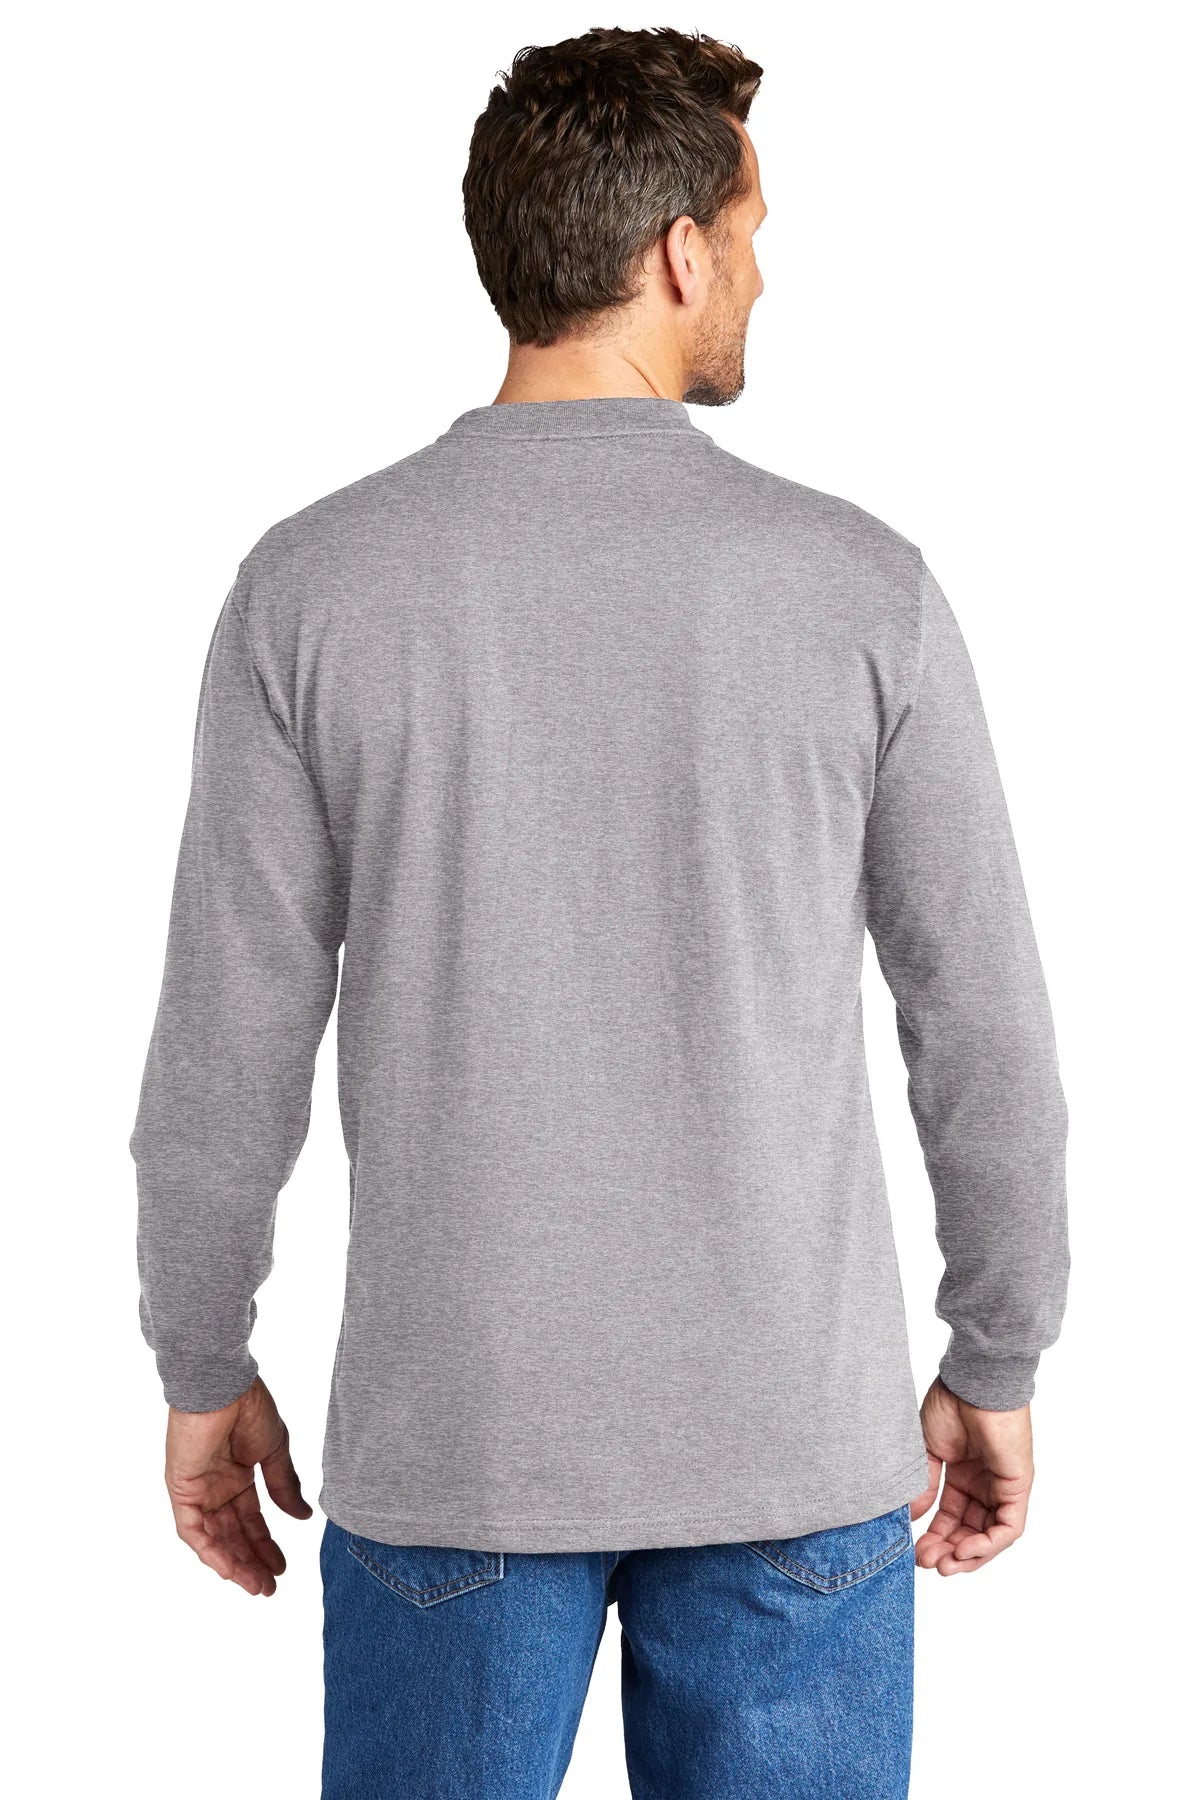 Carhartt Long Sleeve Henley Custom T-Shirts, Heather Grey